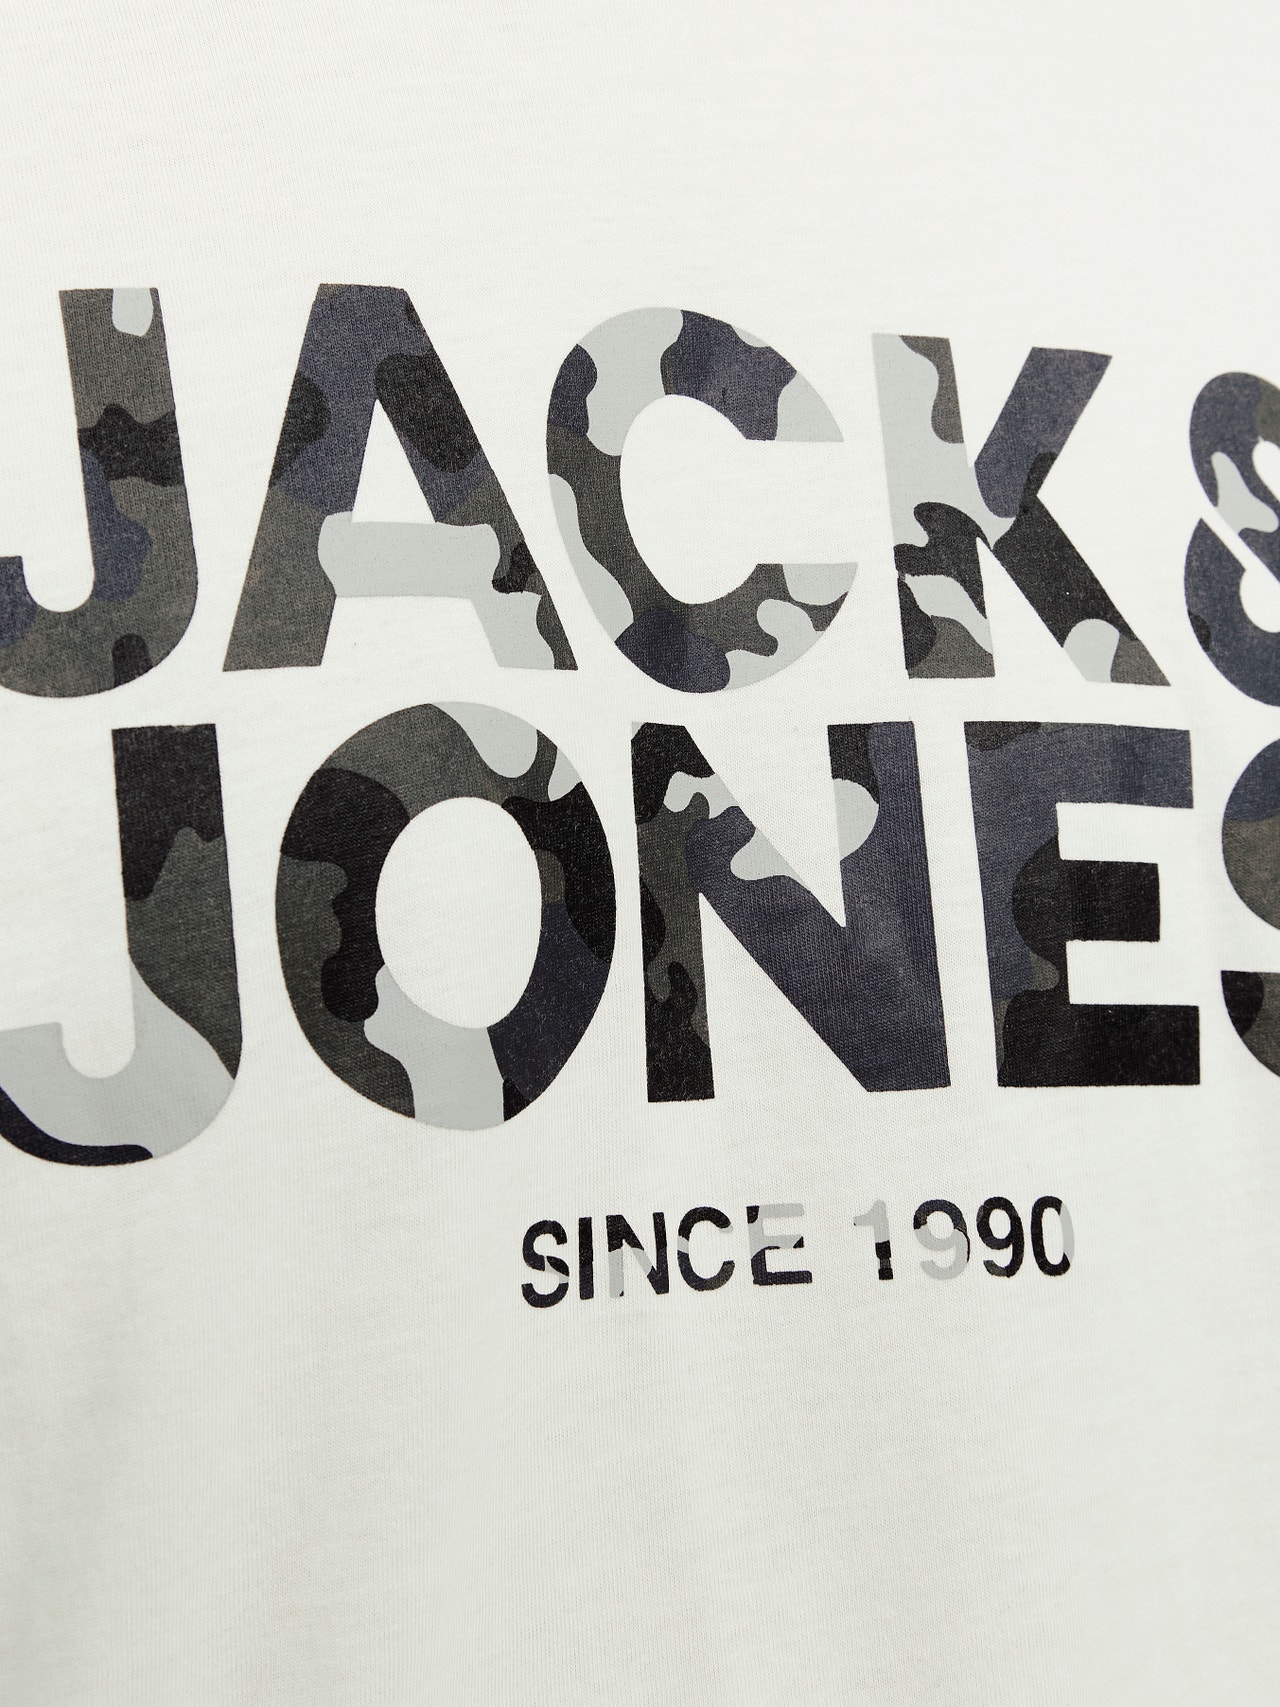 Jack & Jones T-shirt Con logo Girocollo -Cloud Dancer - 12266155